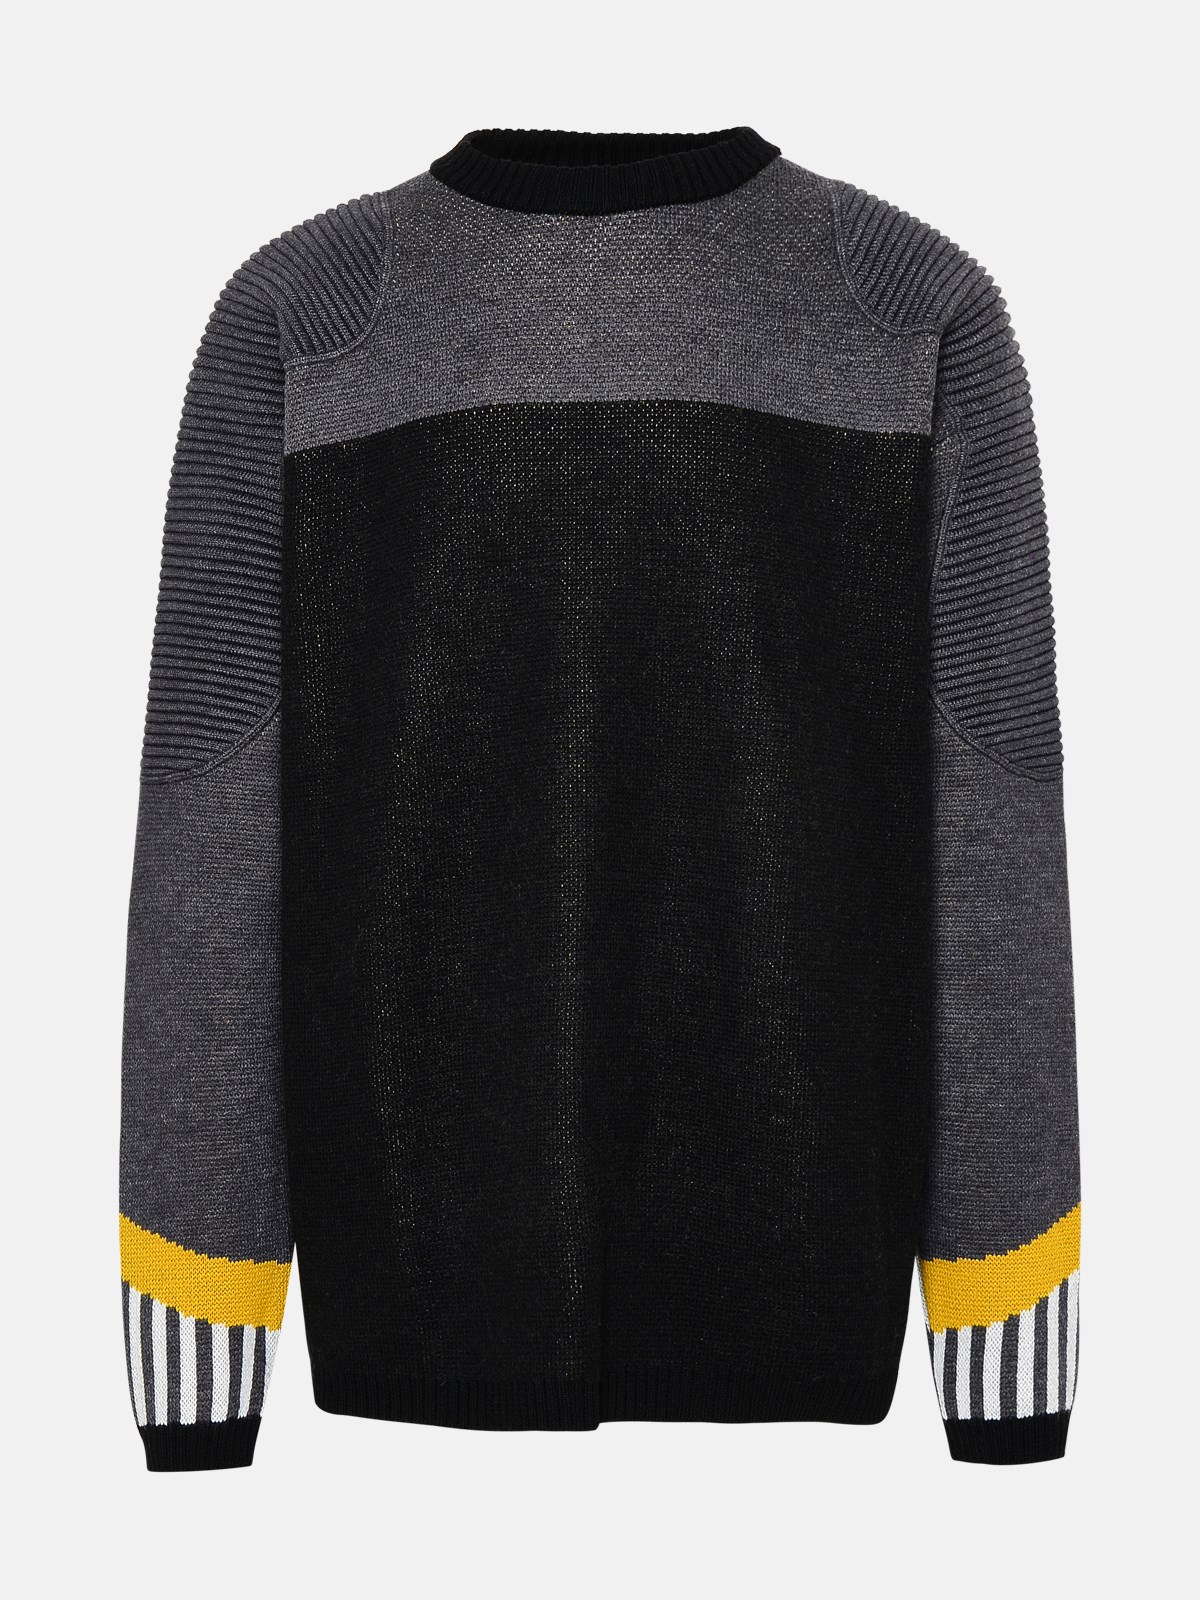 Ferrari Black Wool Sweater